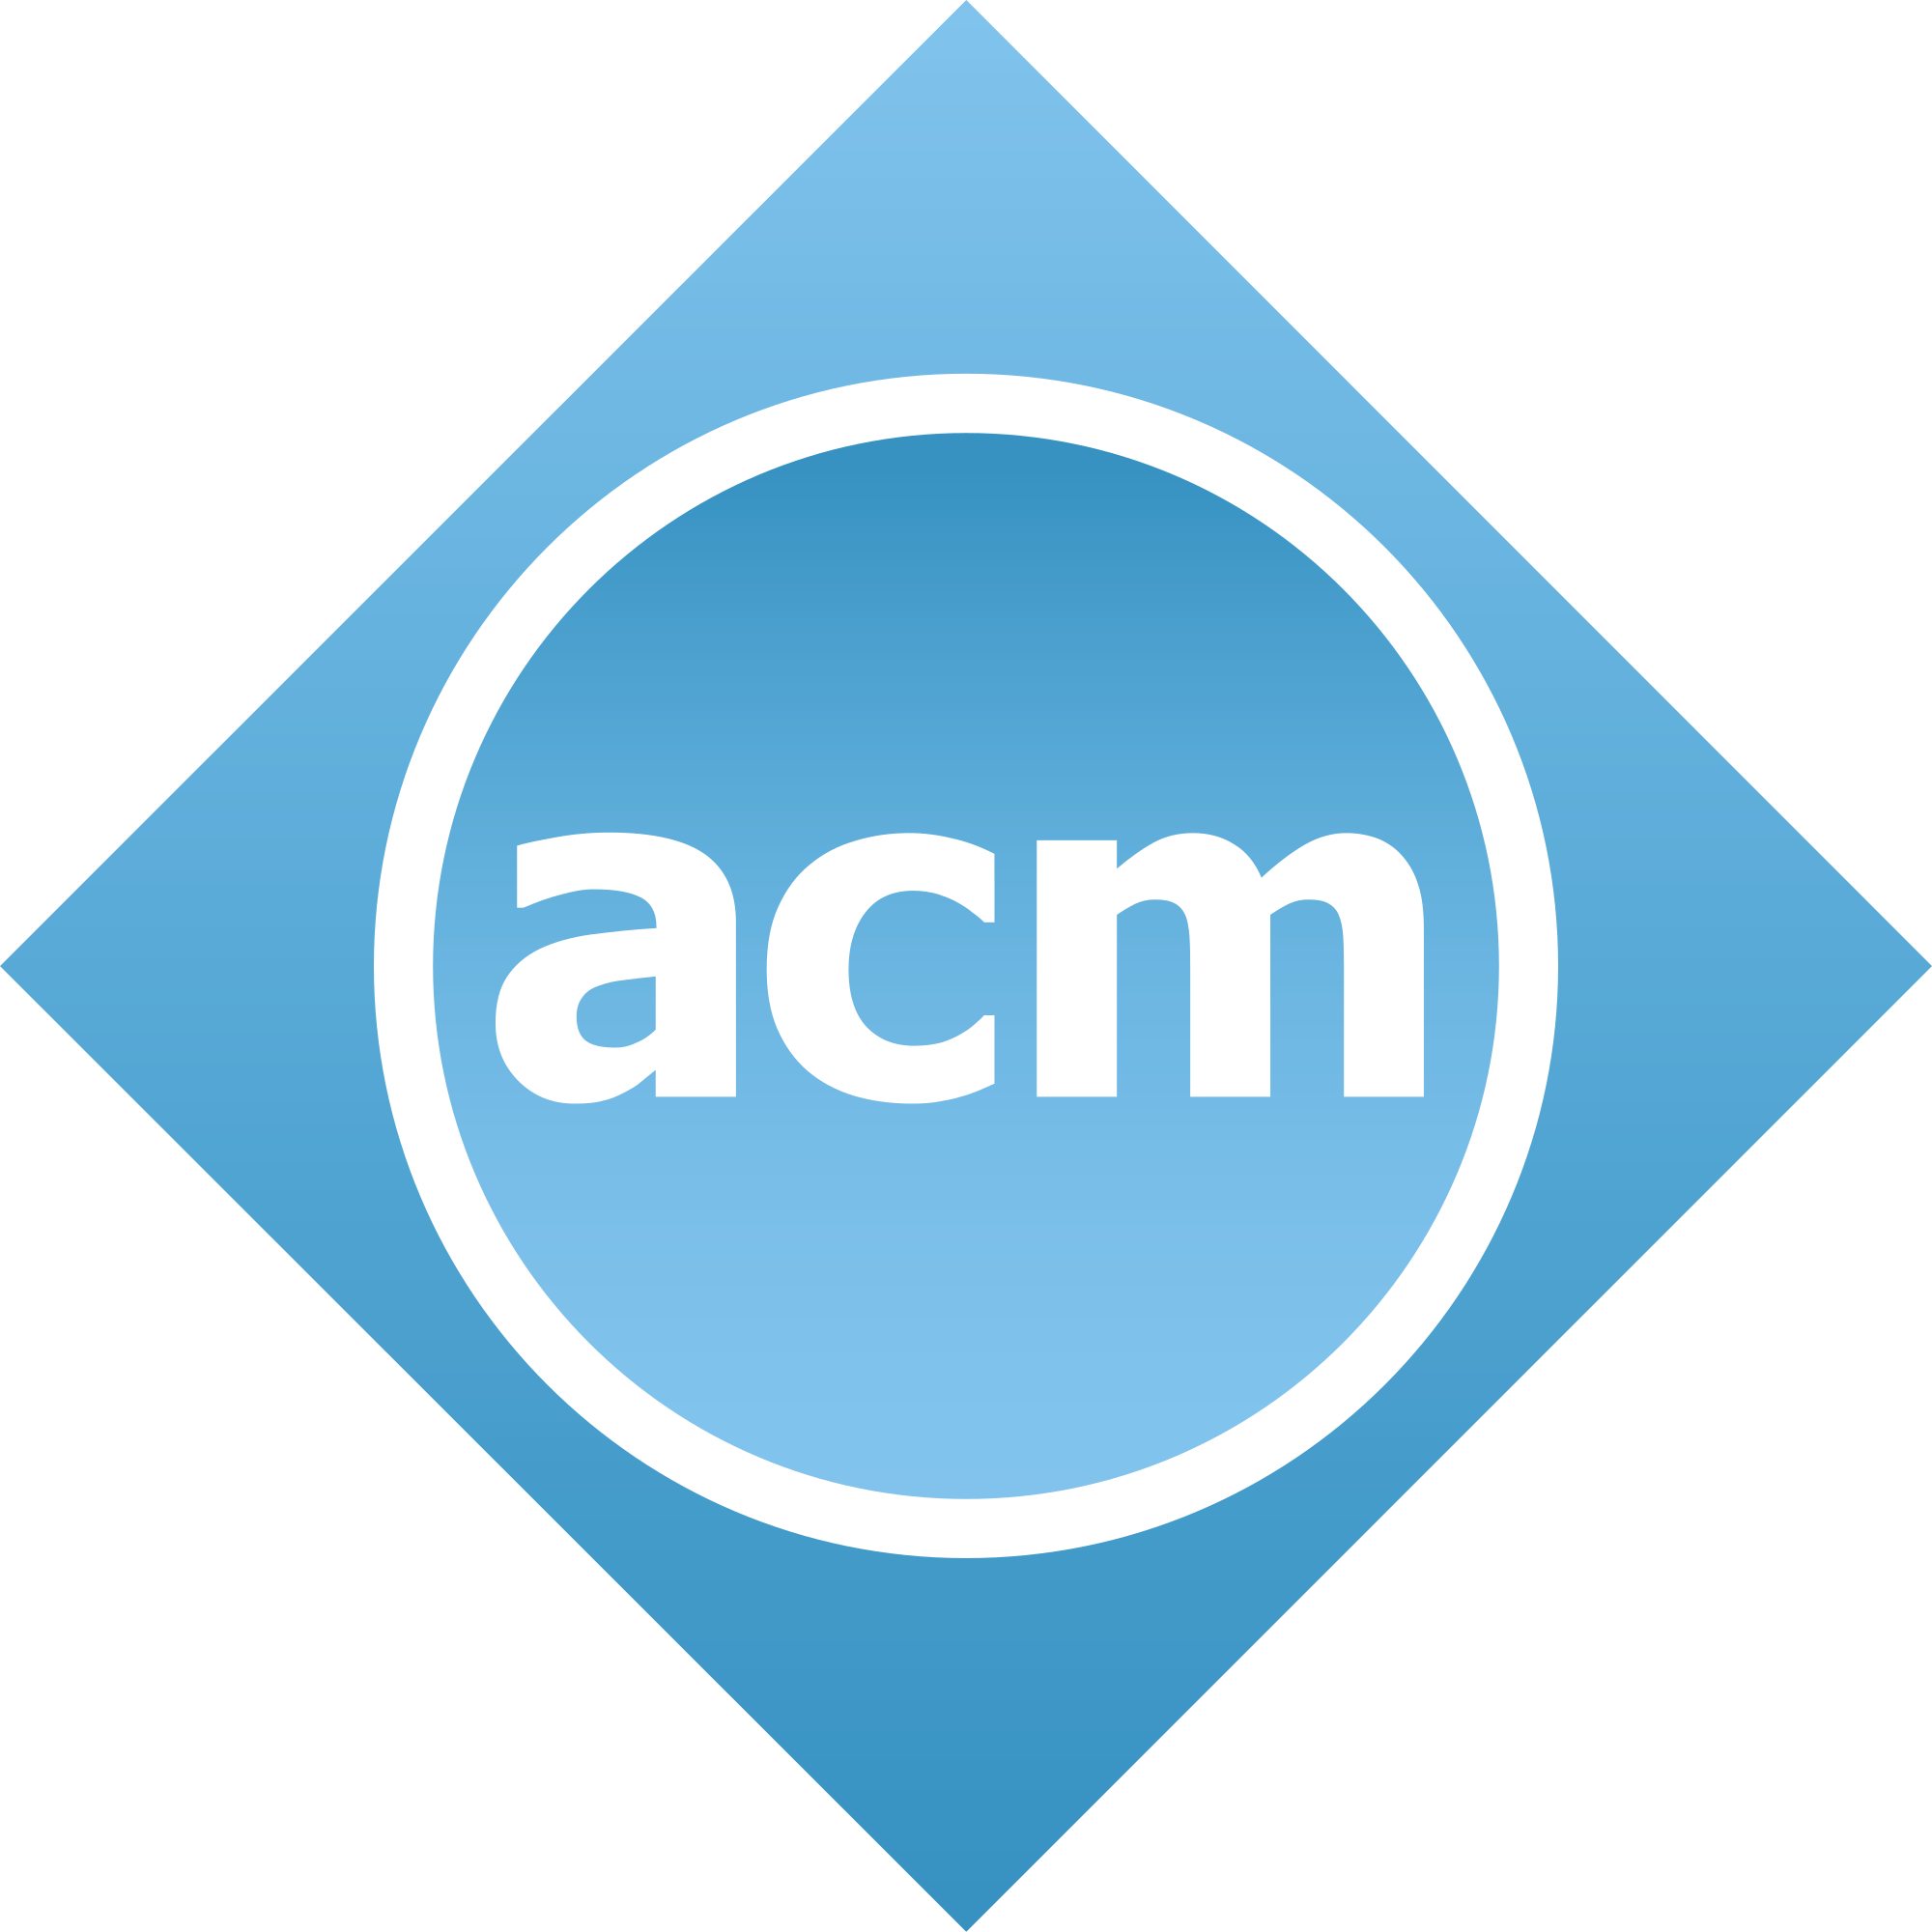 ACM Logo - Association for Computing Machinery (ACM) logo.svg